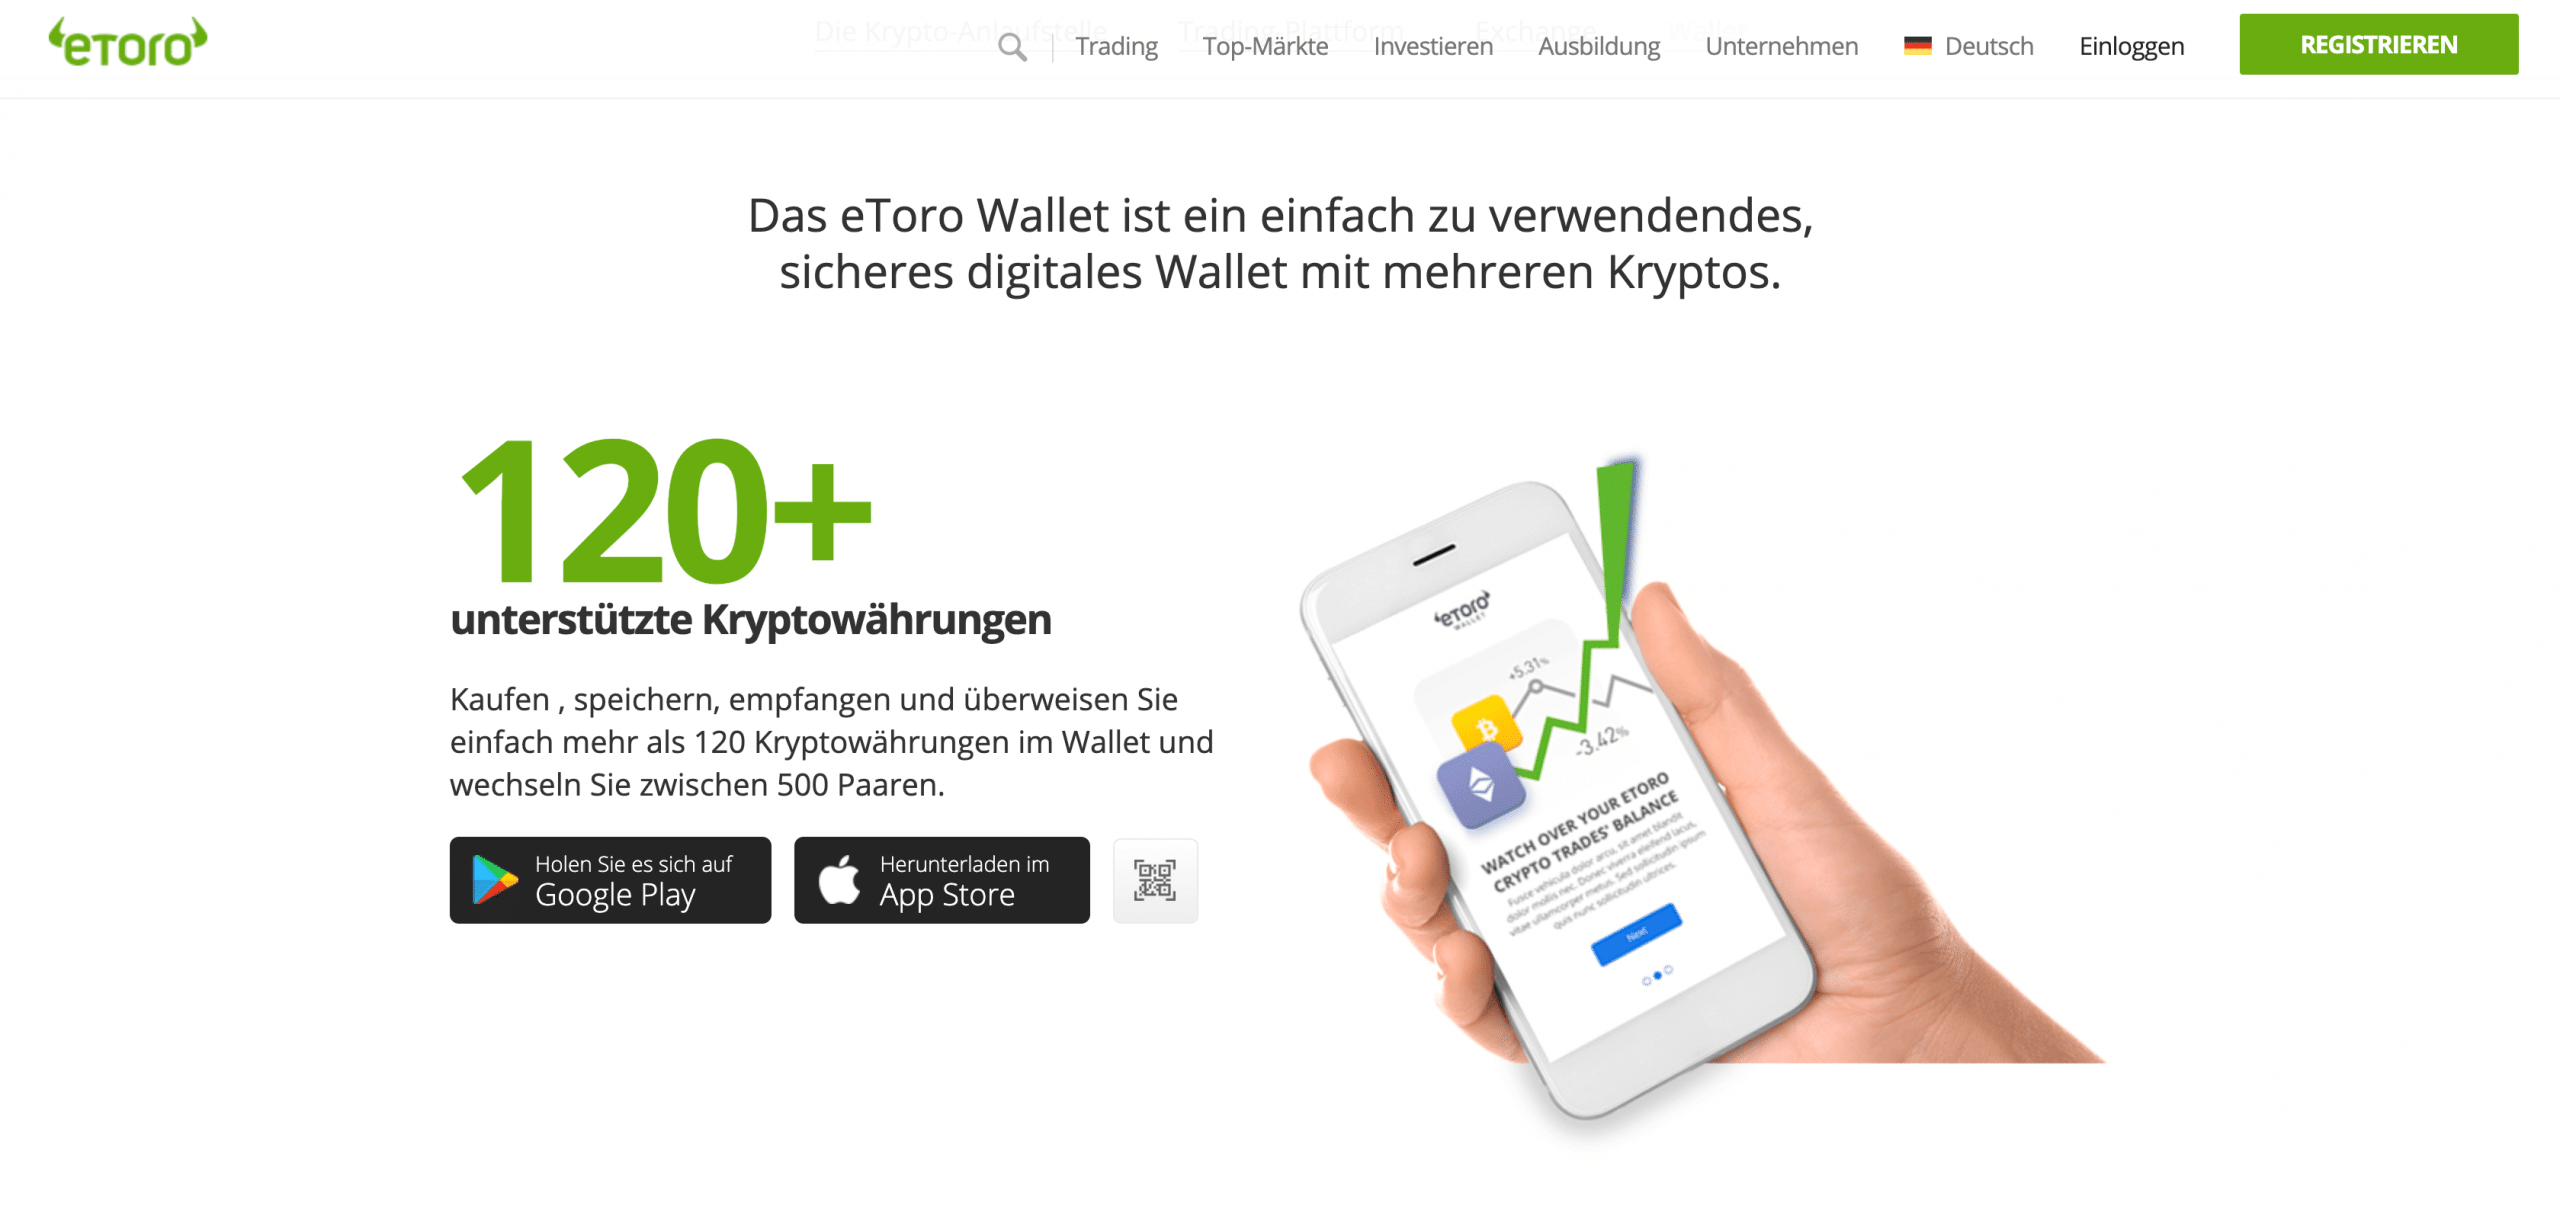 Beste Crypto-Kauf-App fur Anfanger